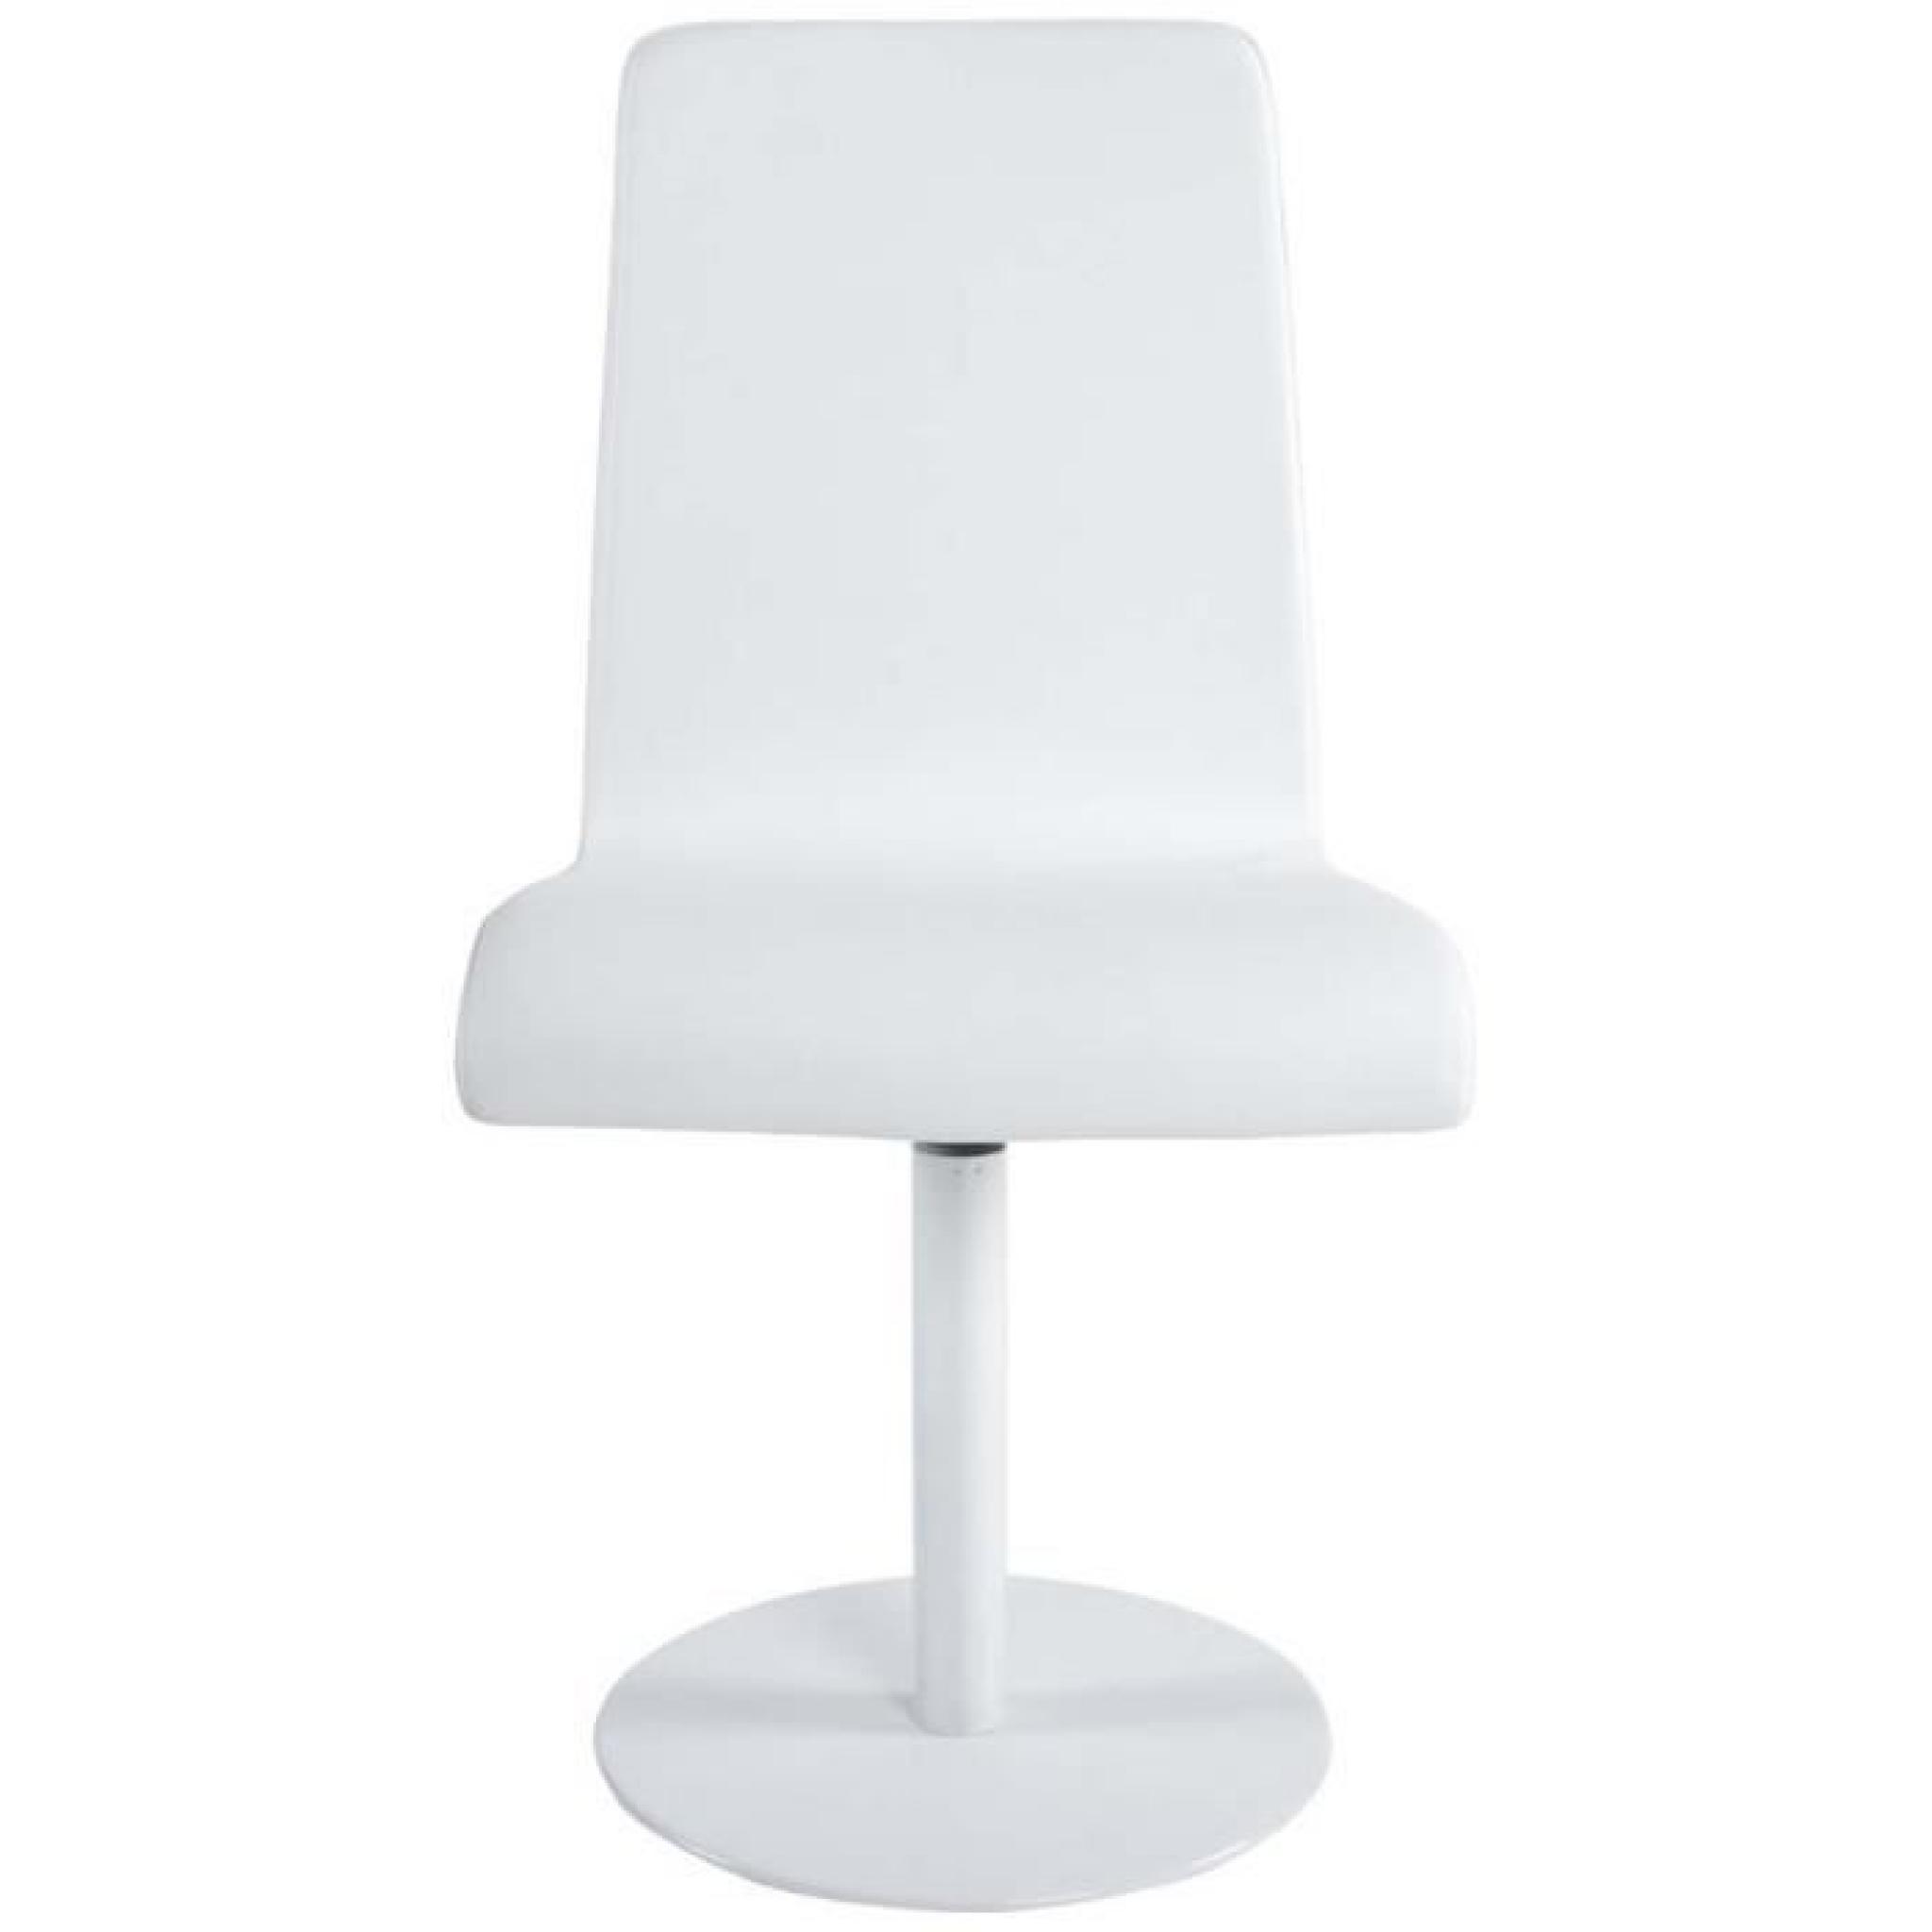 Chaise design Roundy blanche Couleur Blanc pas cher